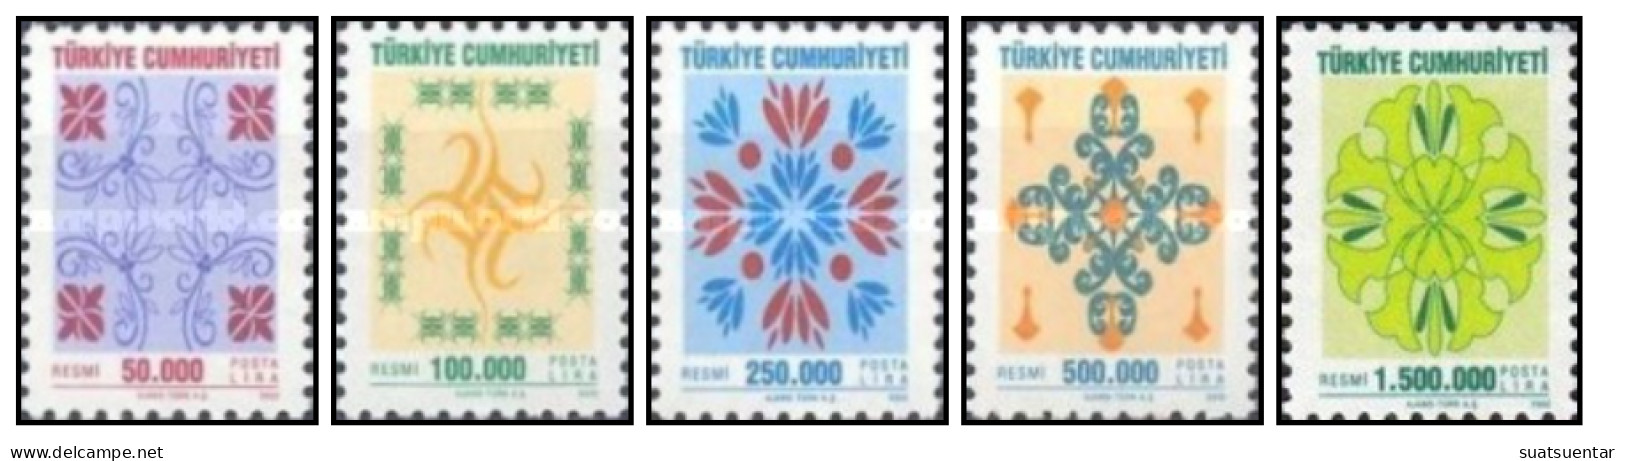 2002 Official Stamps - New Designs MNH - Dienstzegels